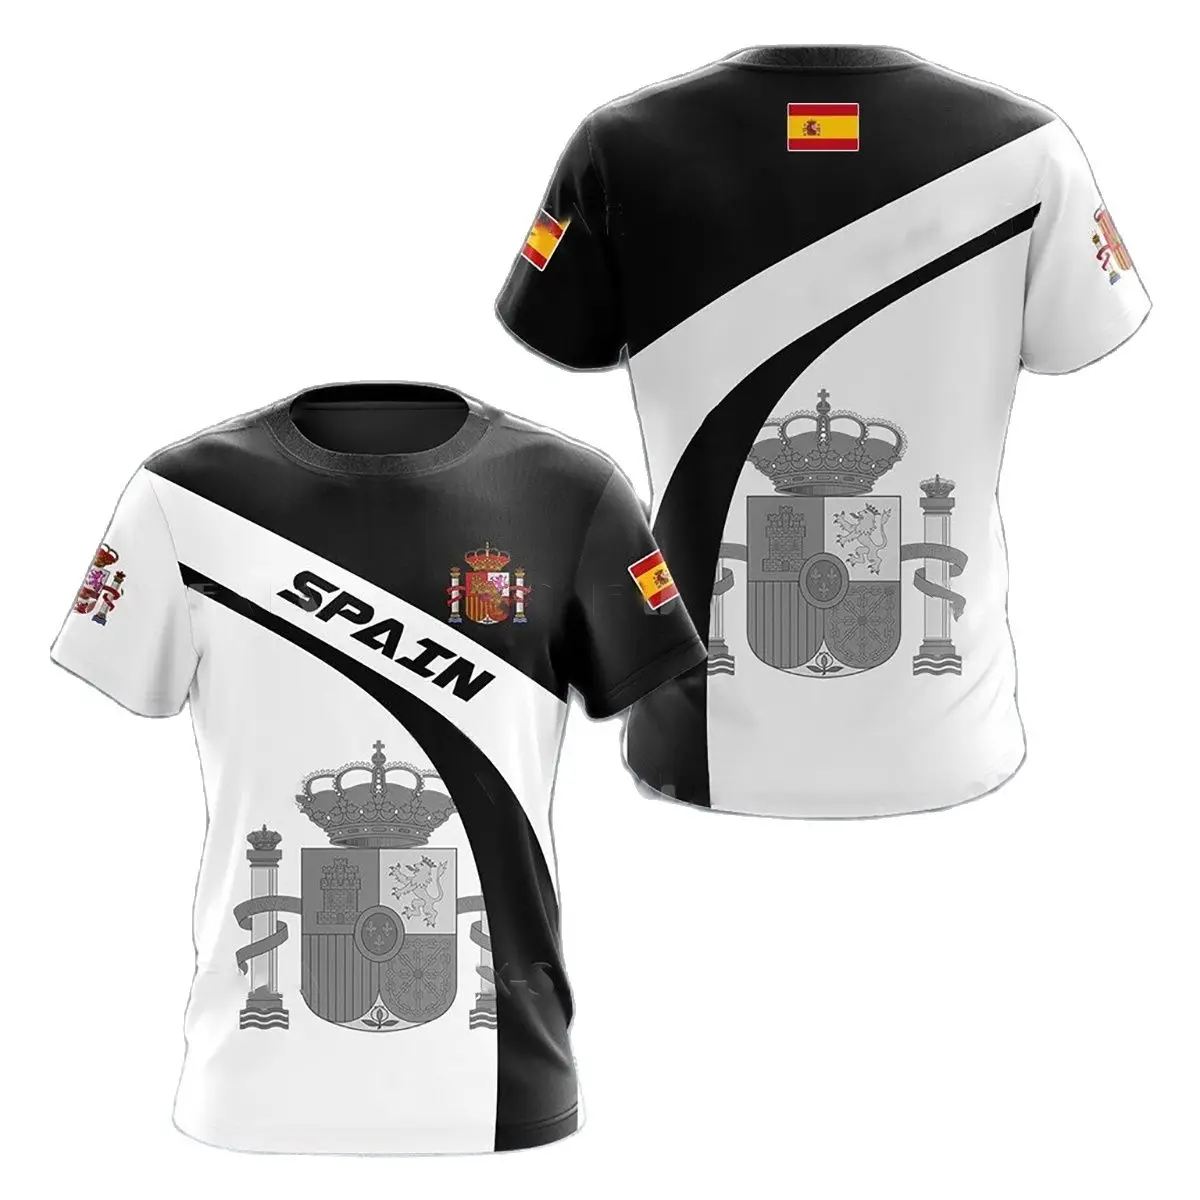 

SPAIN Spain National Emblem Printed 3D Men's T-Shirt O-Neck Short Sleeve Fashion Cool Clothing Large Size Loose T shirt for Men